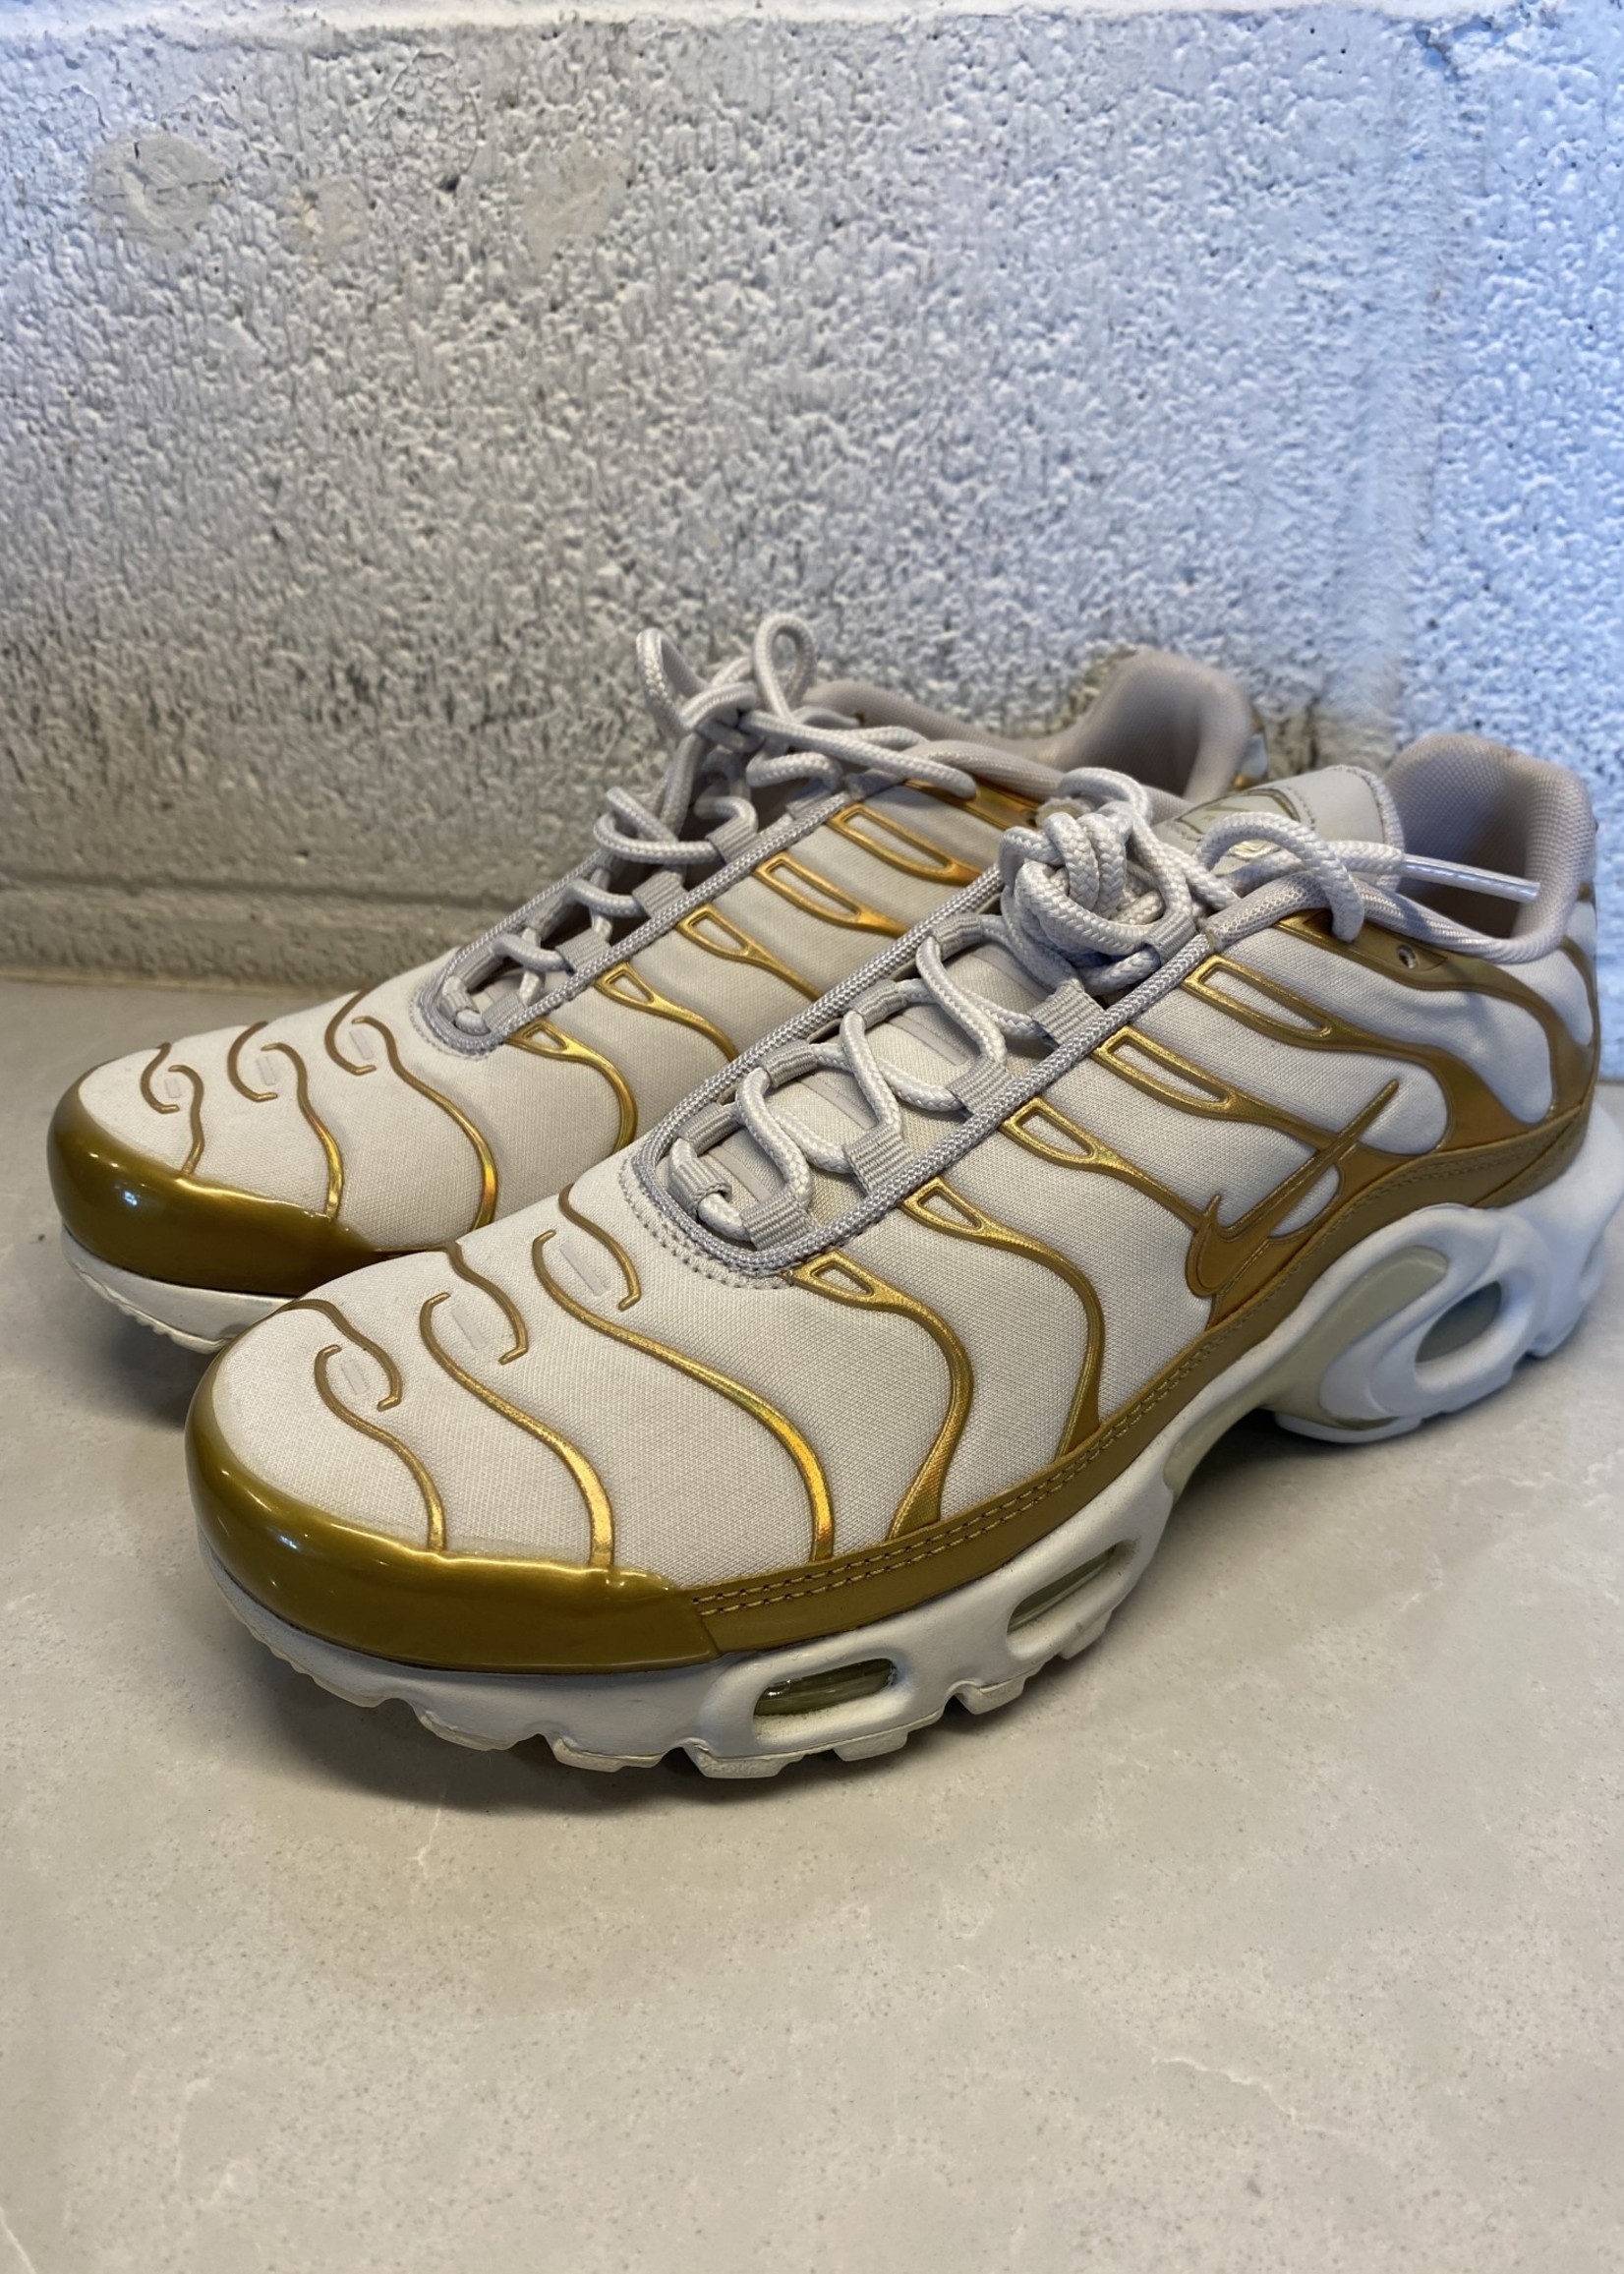 Nike Airmax TN Gold White Sneakers Fem 7